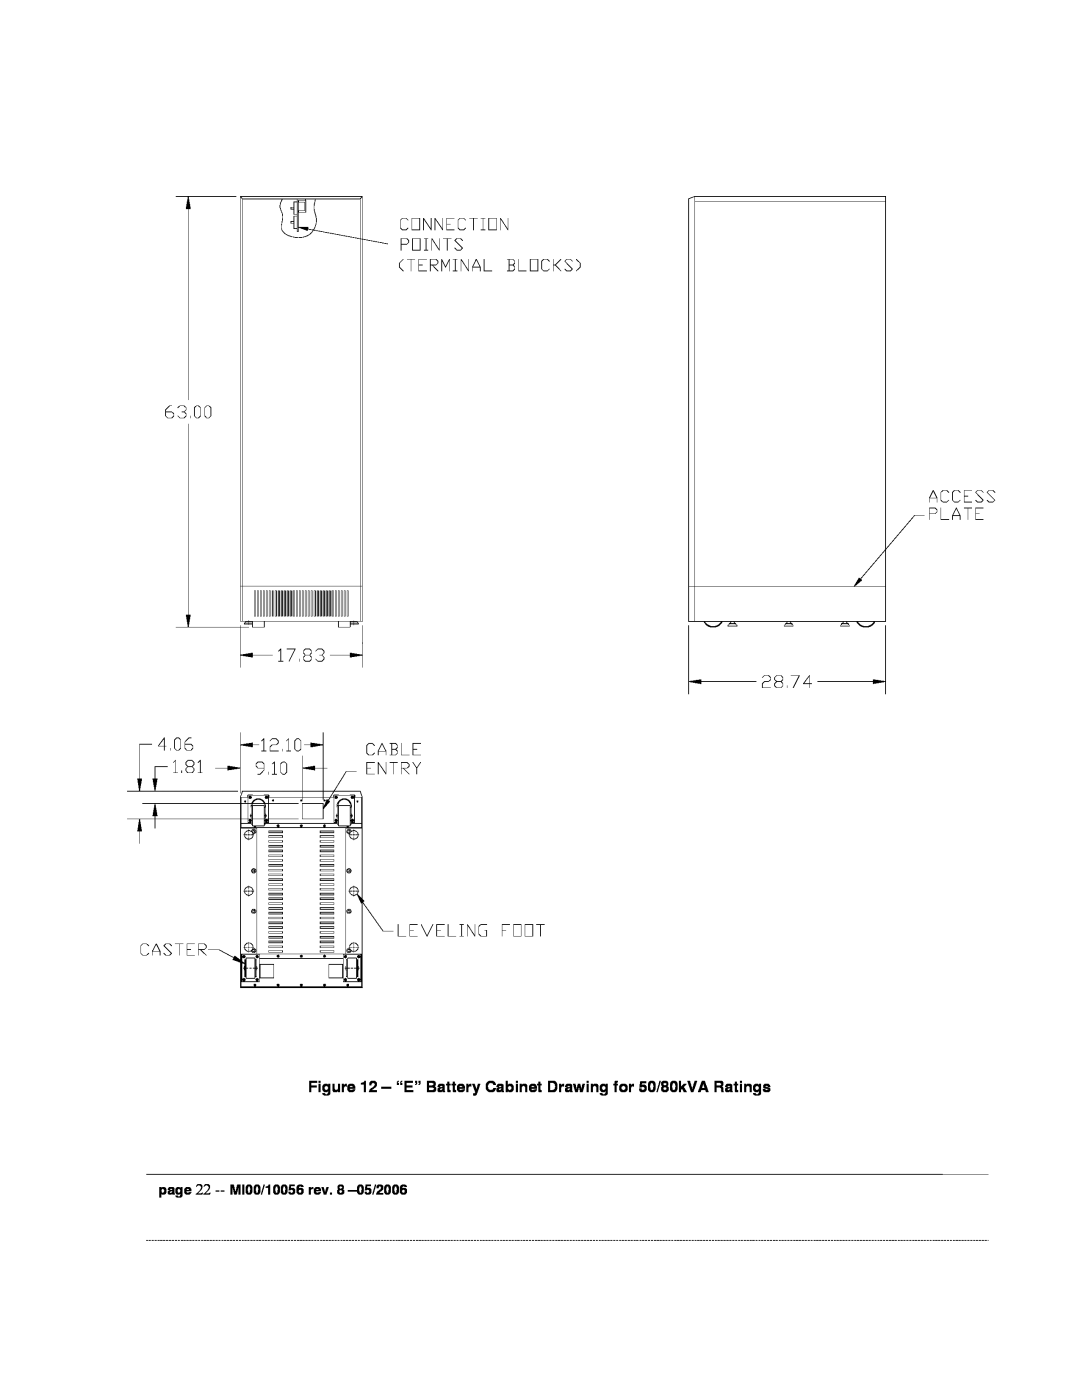 Garmin EDP70 manual “E” Battery Cabinet Drawing for 50/80kVA Ratings, page 22 -- MI00/10056 rev. 8 -05/2006 